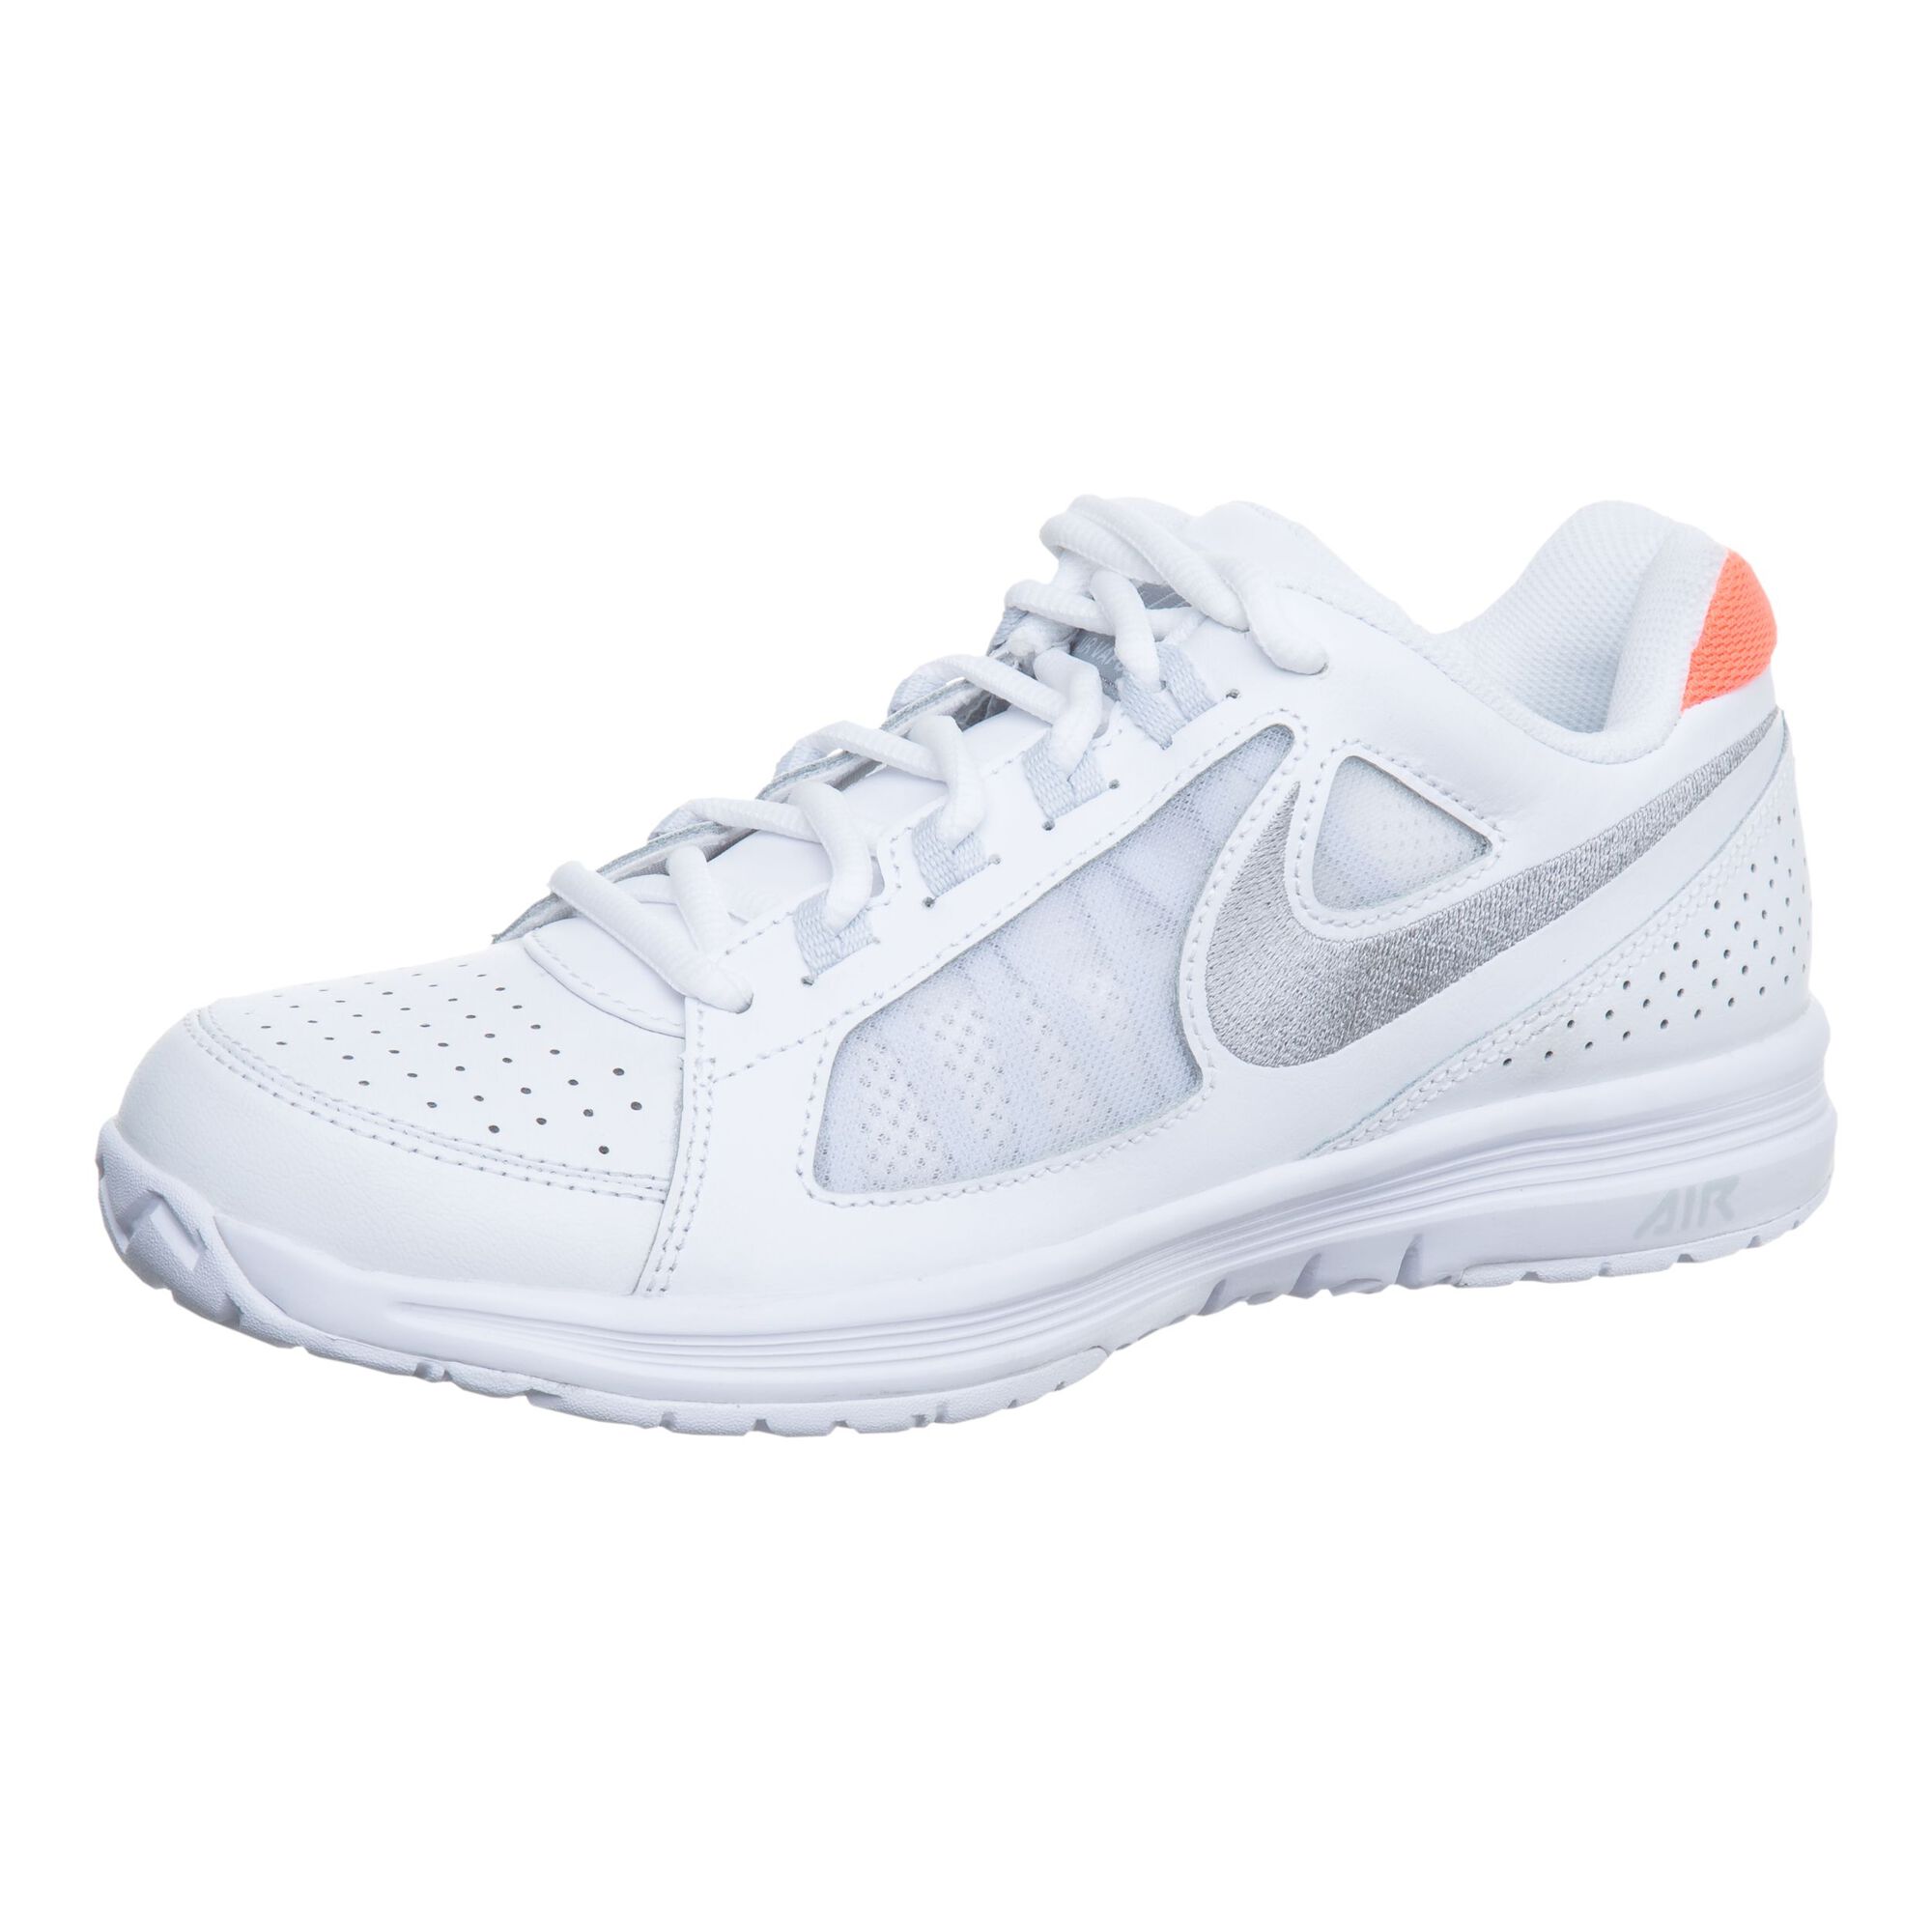 buy Nike Air Vapor Ace All Court Shoe Women - White online | Tennis-Point